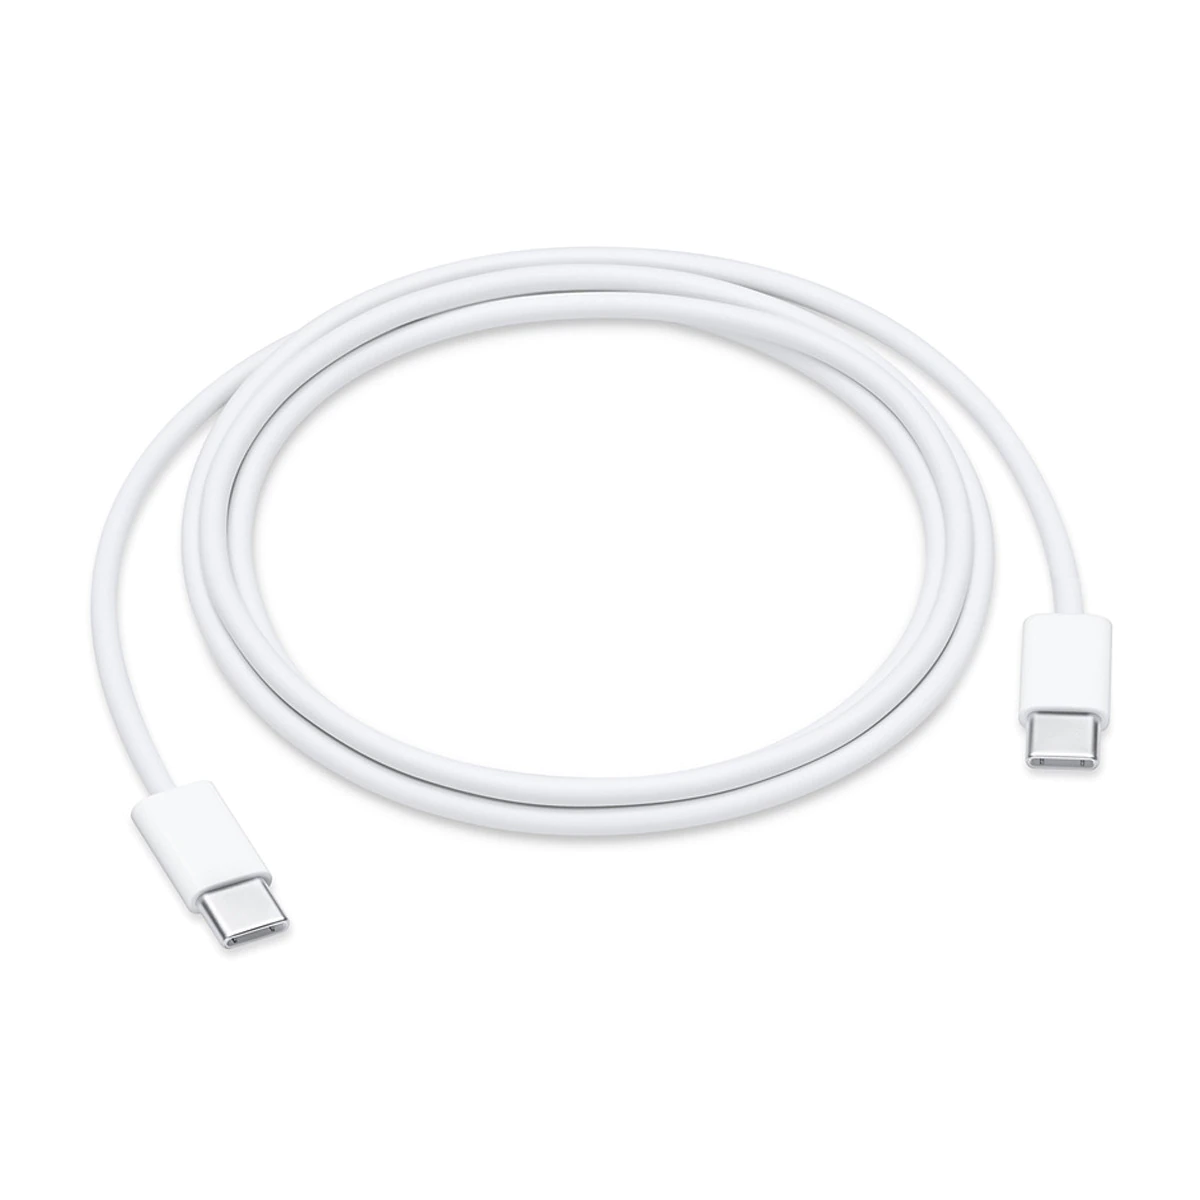 Cable de carga Apple de USB-C a USB-C de 1 metro